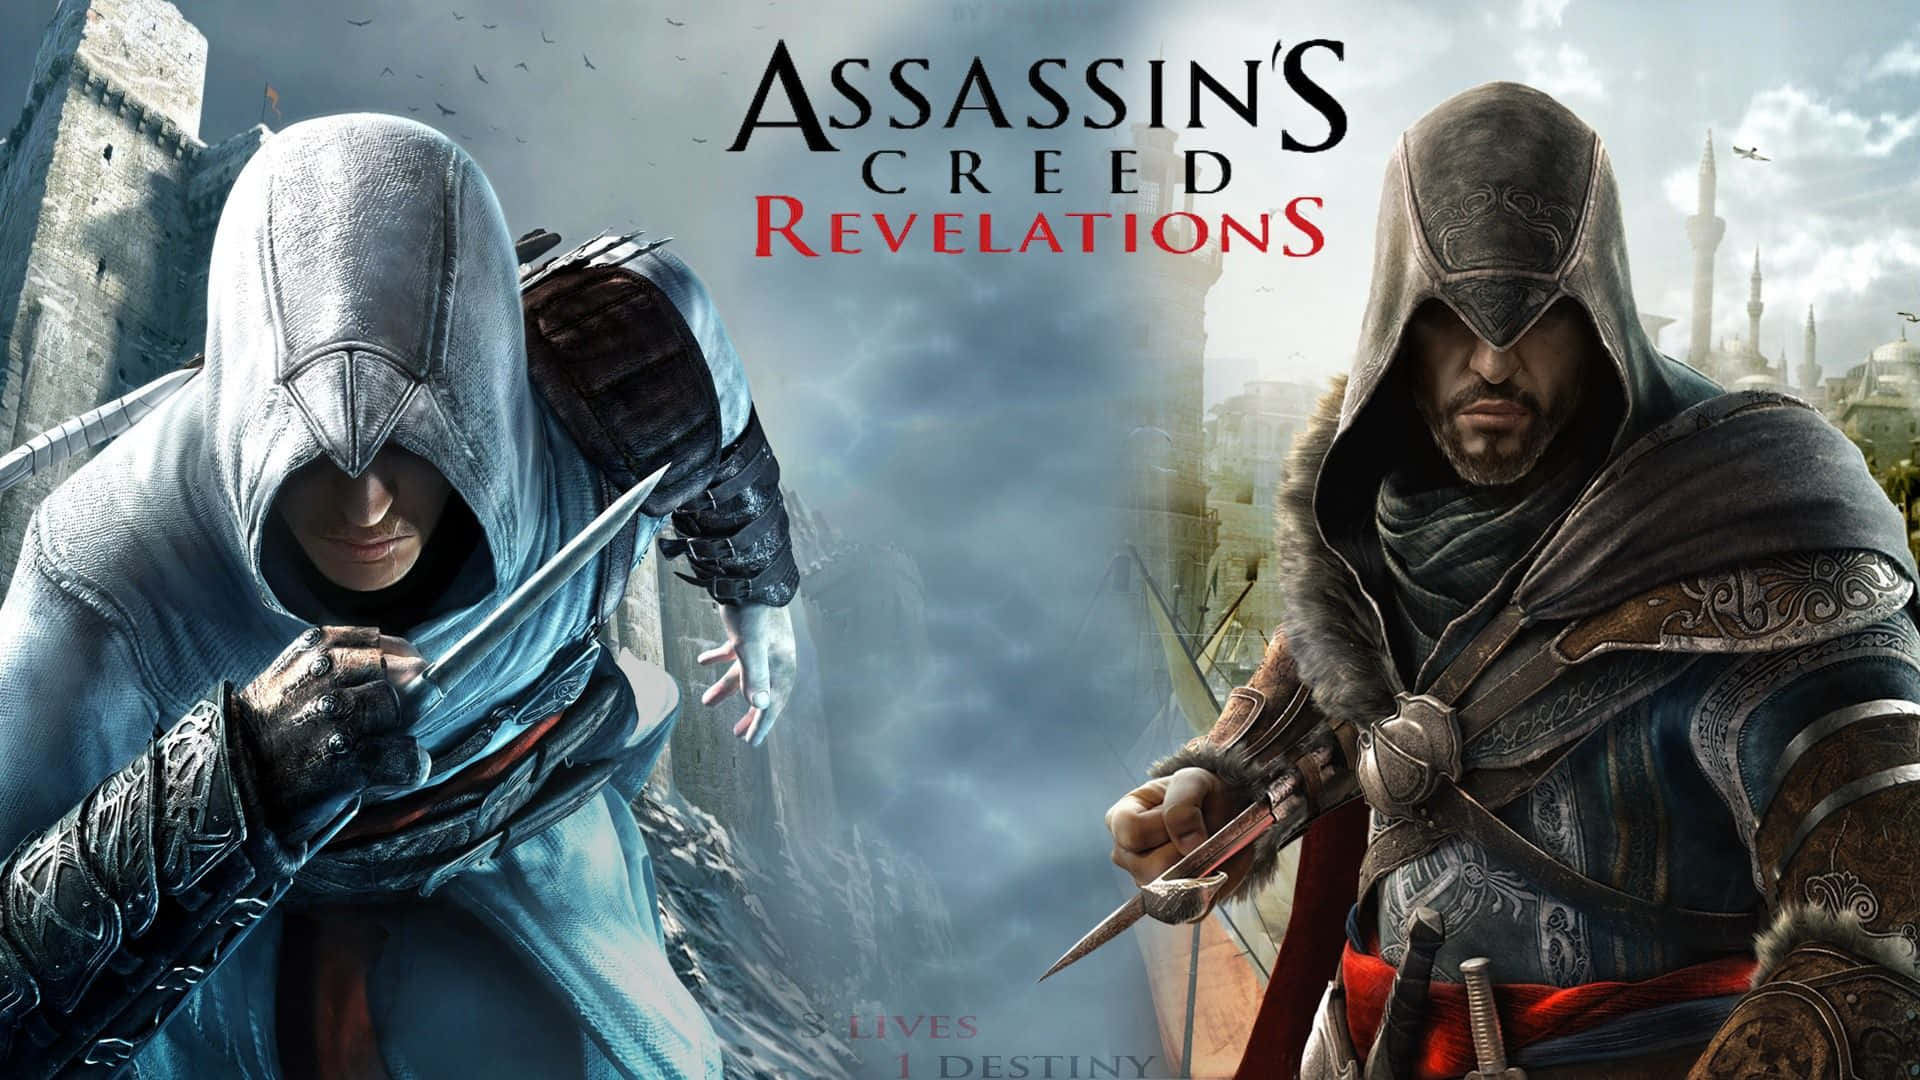 Ezioauditore, El Legendario Asesino, En Assassin's Creed Revelations. Fondo de pantalla